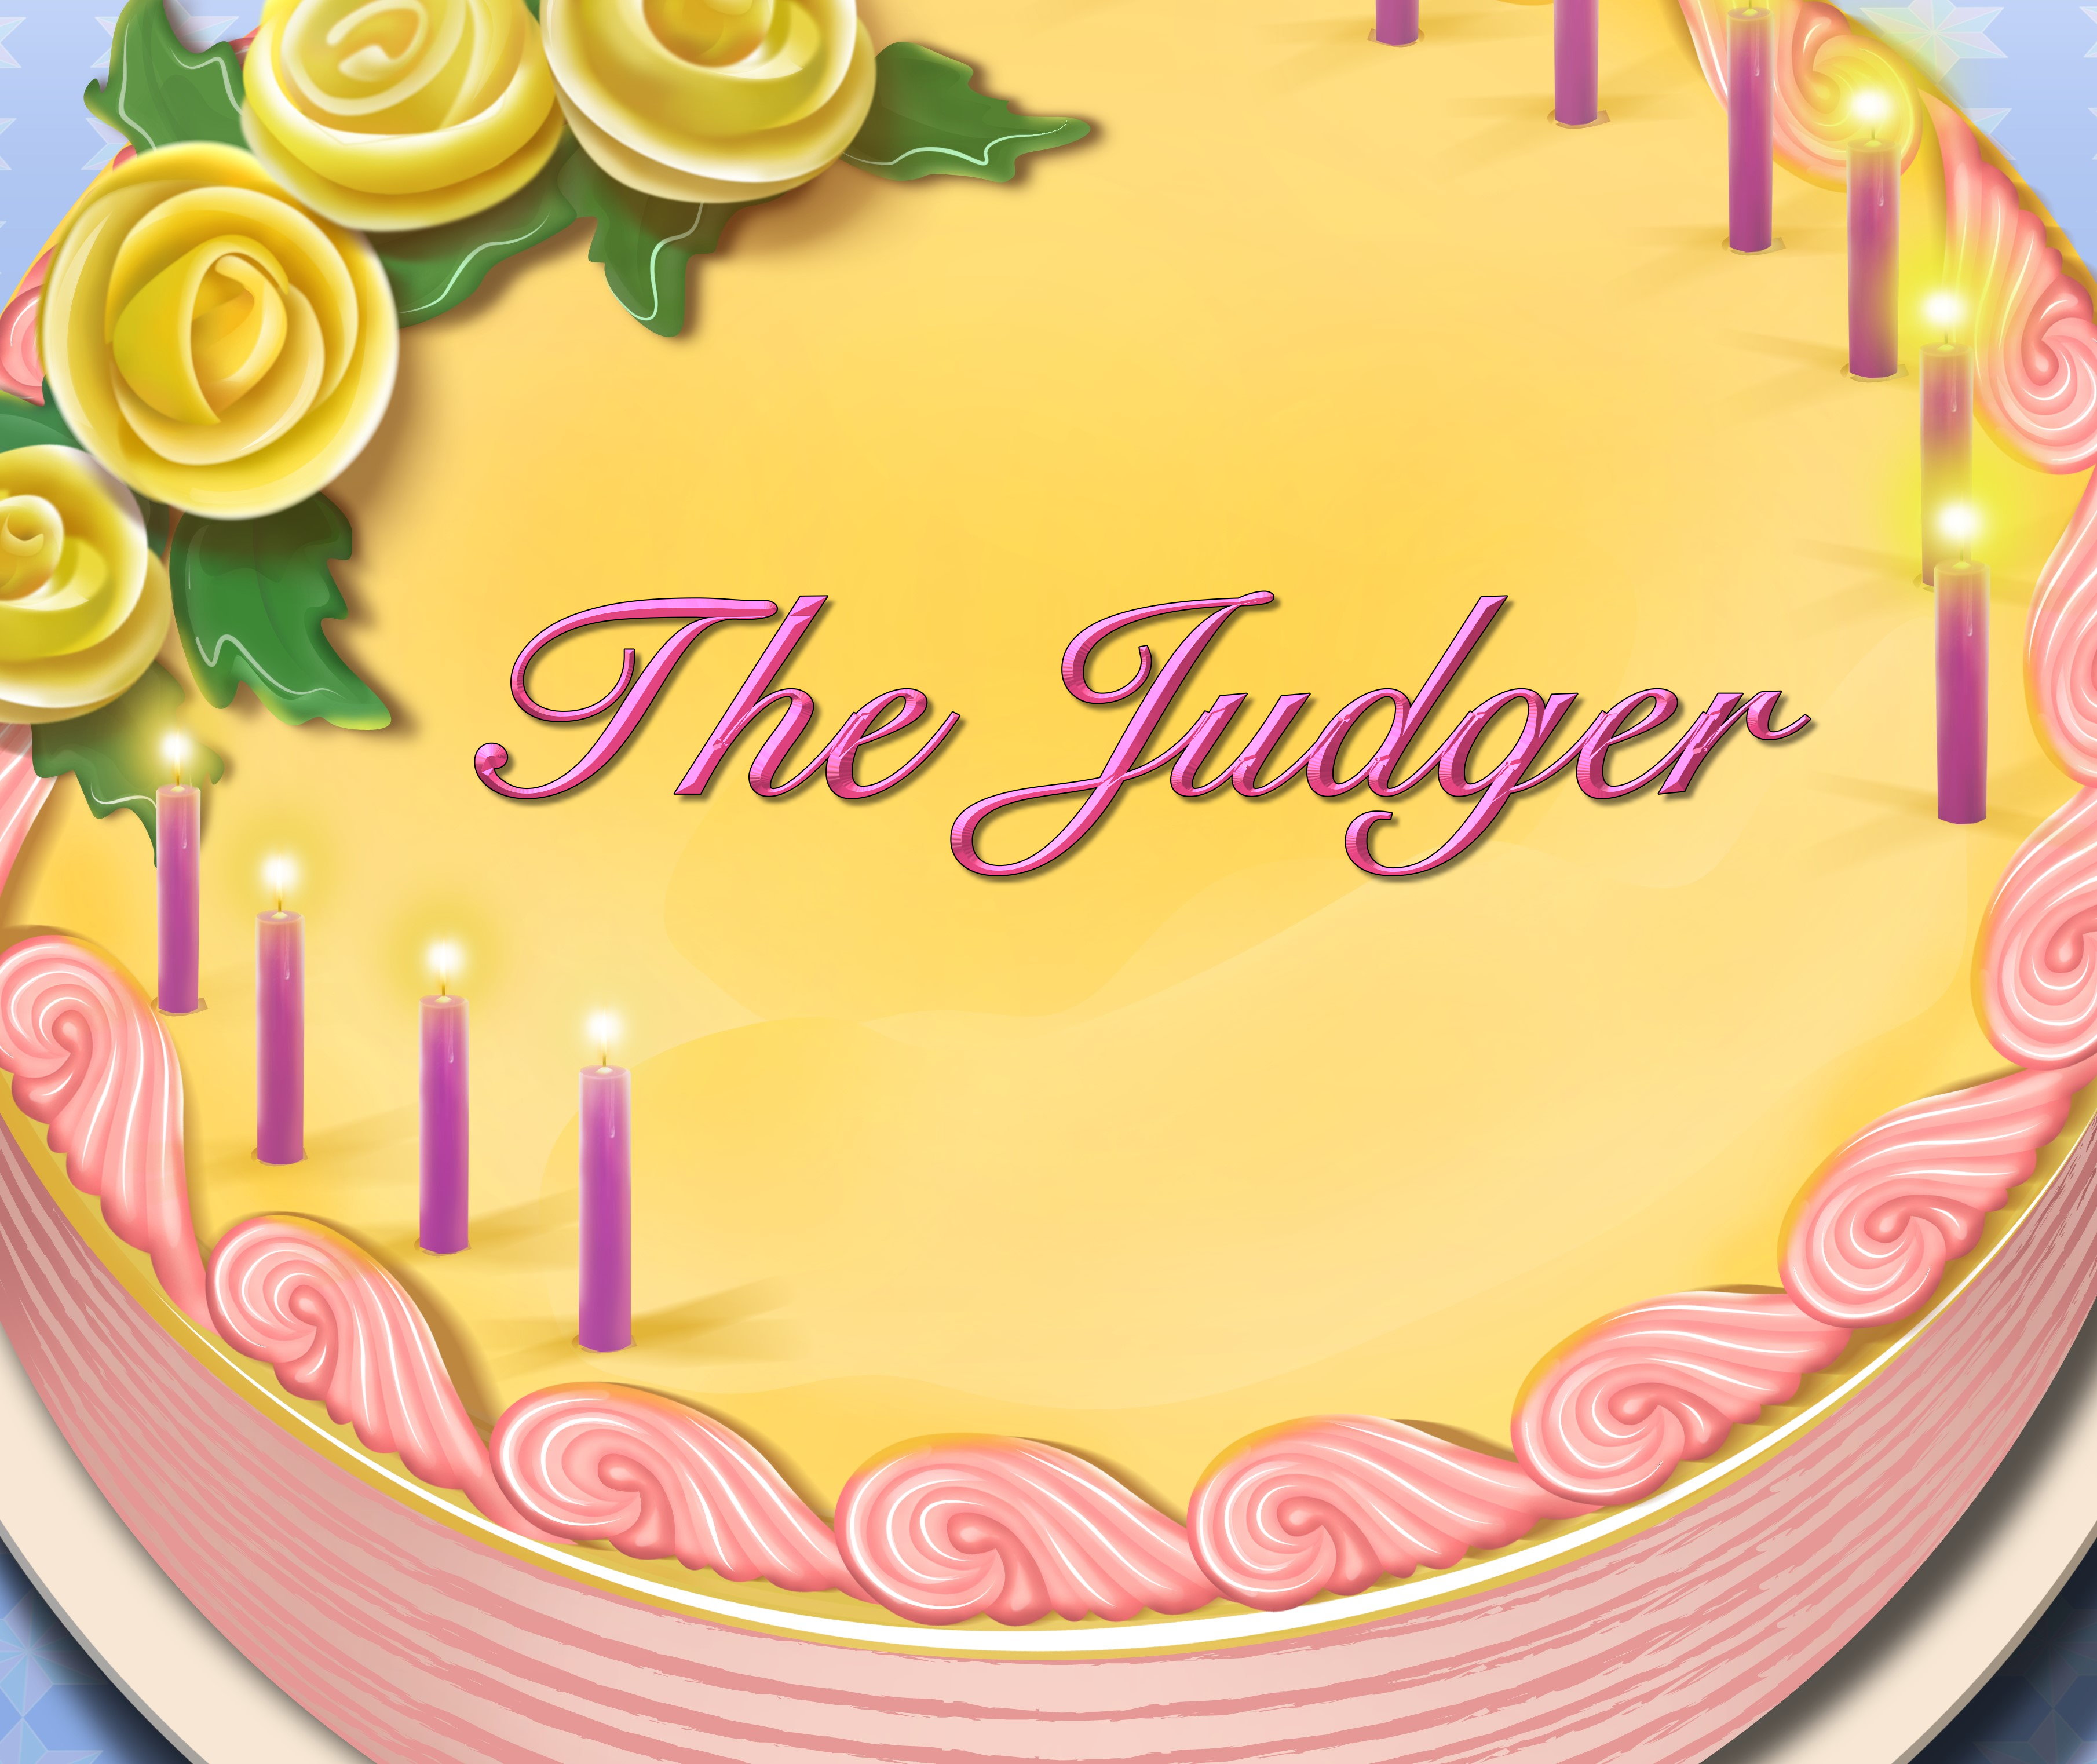 The Judger Birthday Cake